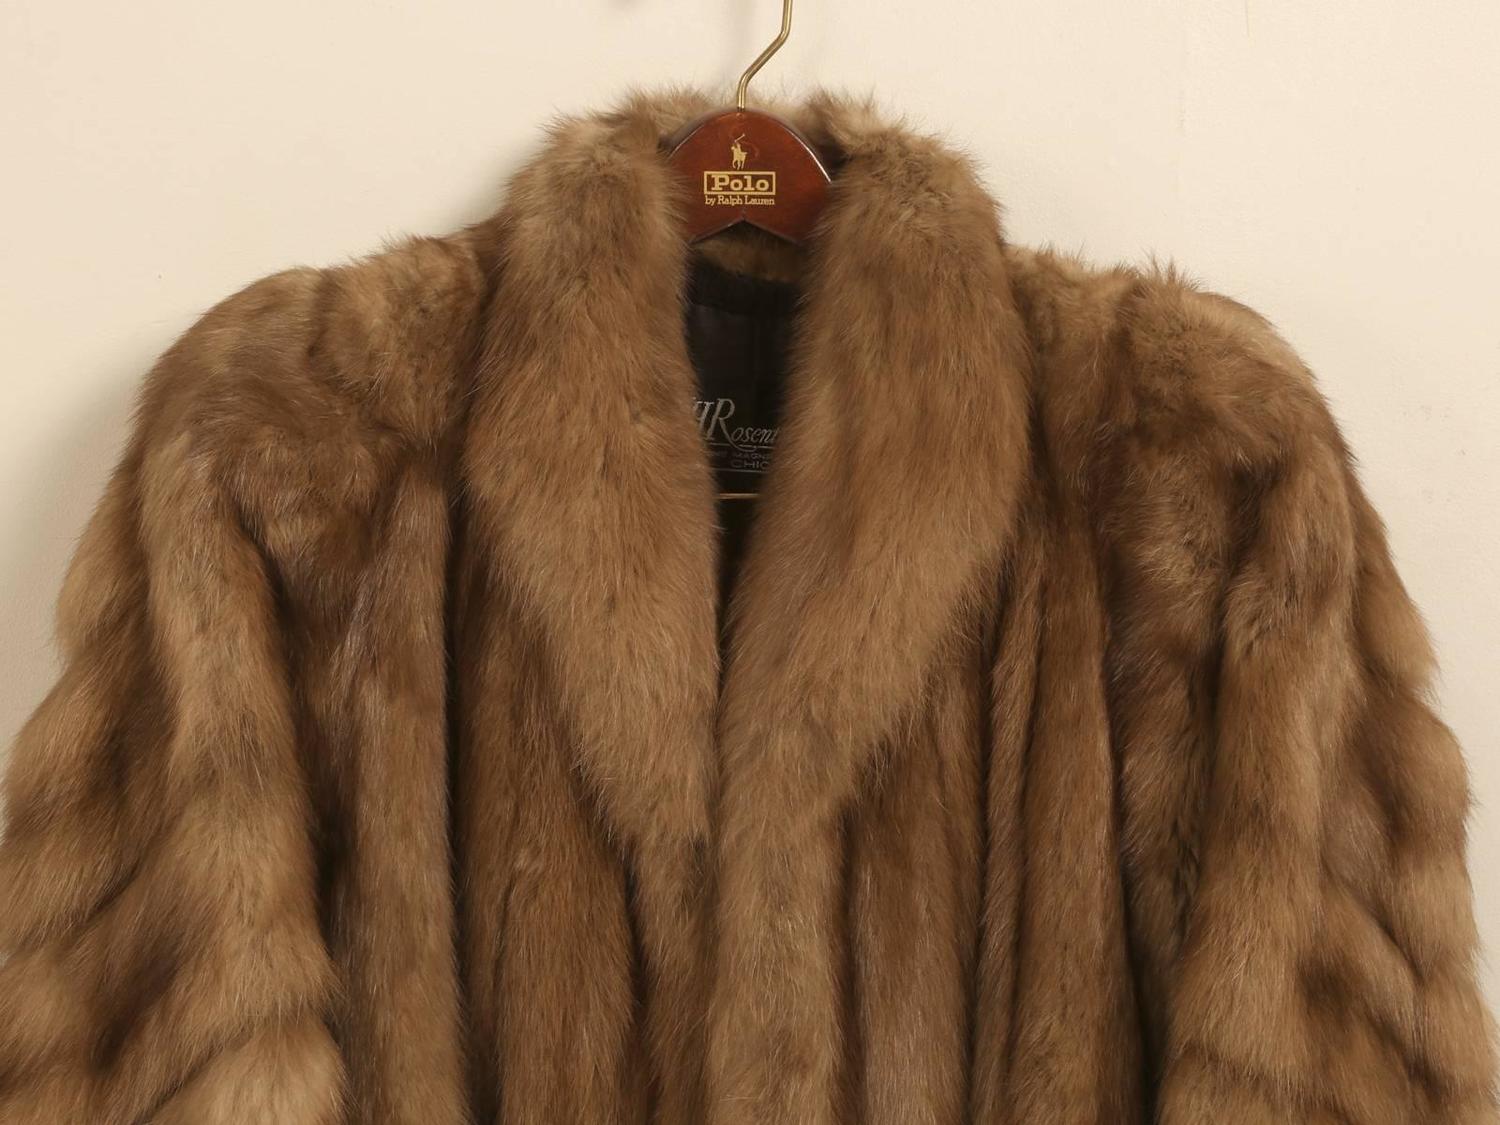 Bob Mackie Sable Fur Coat For Sale at 1stdibs